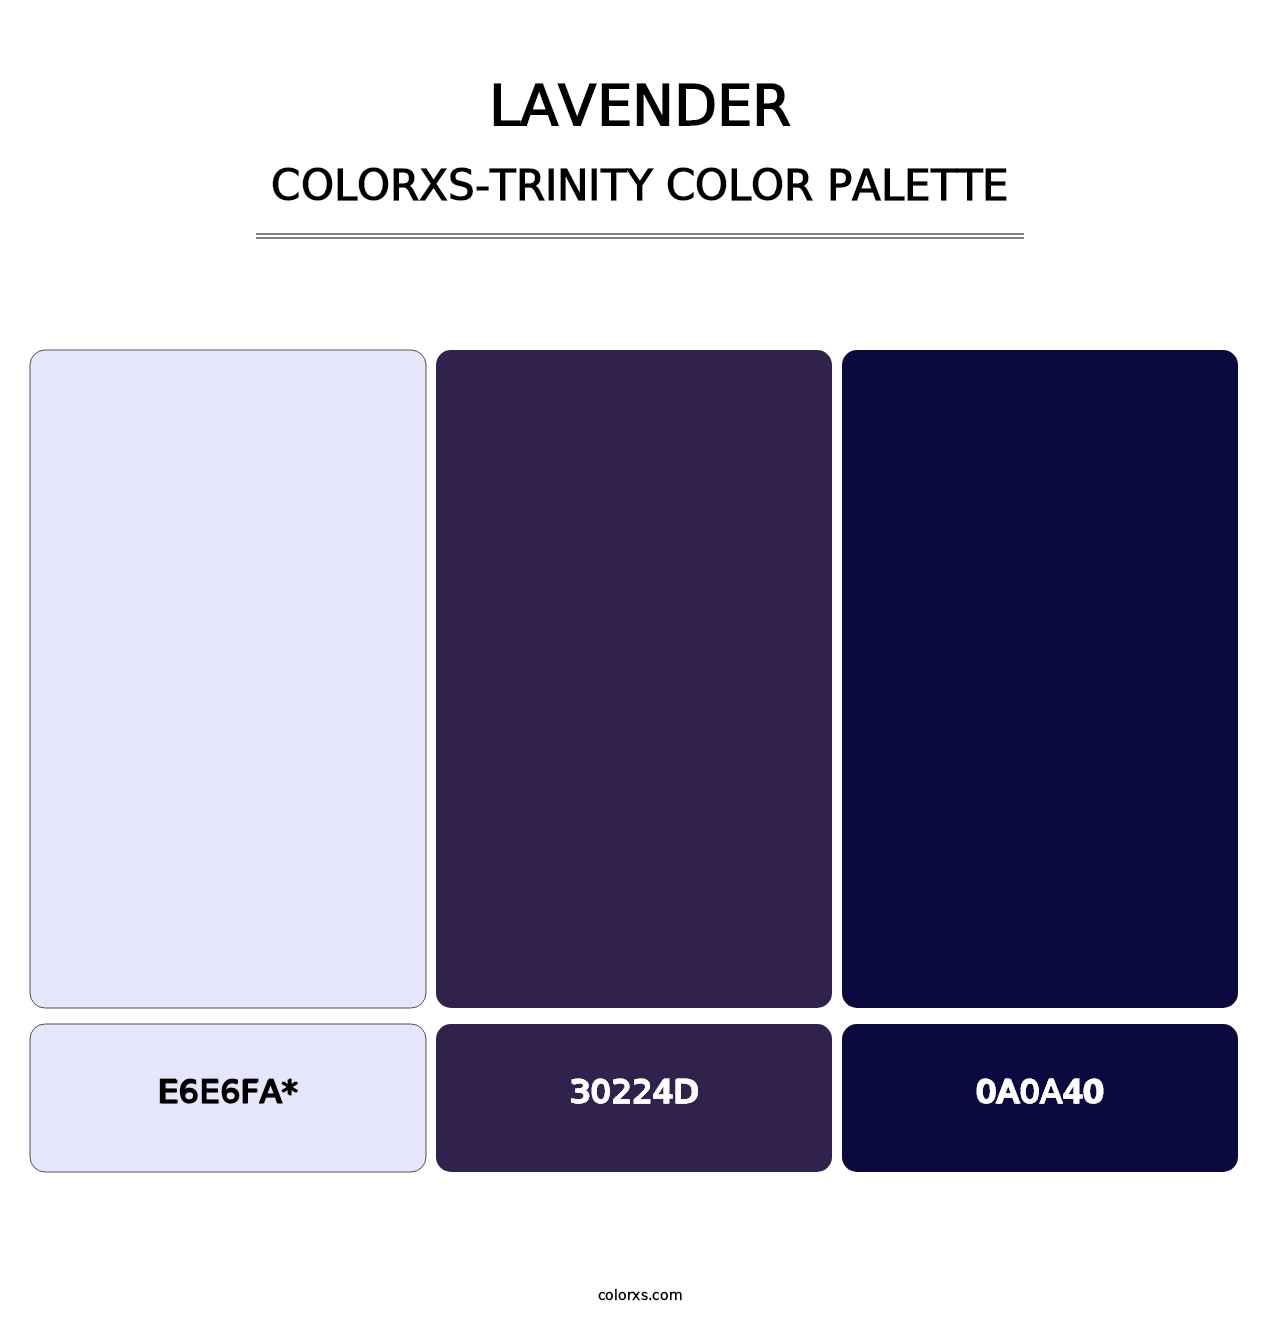 Lavender - Colorxs Trinity Palette